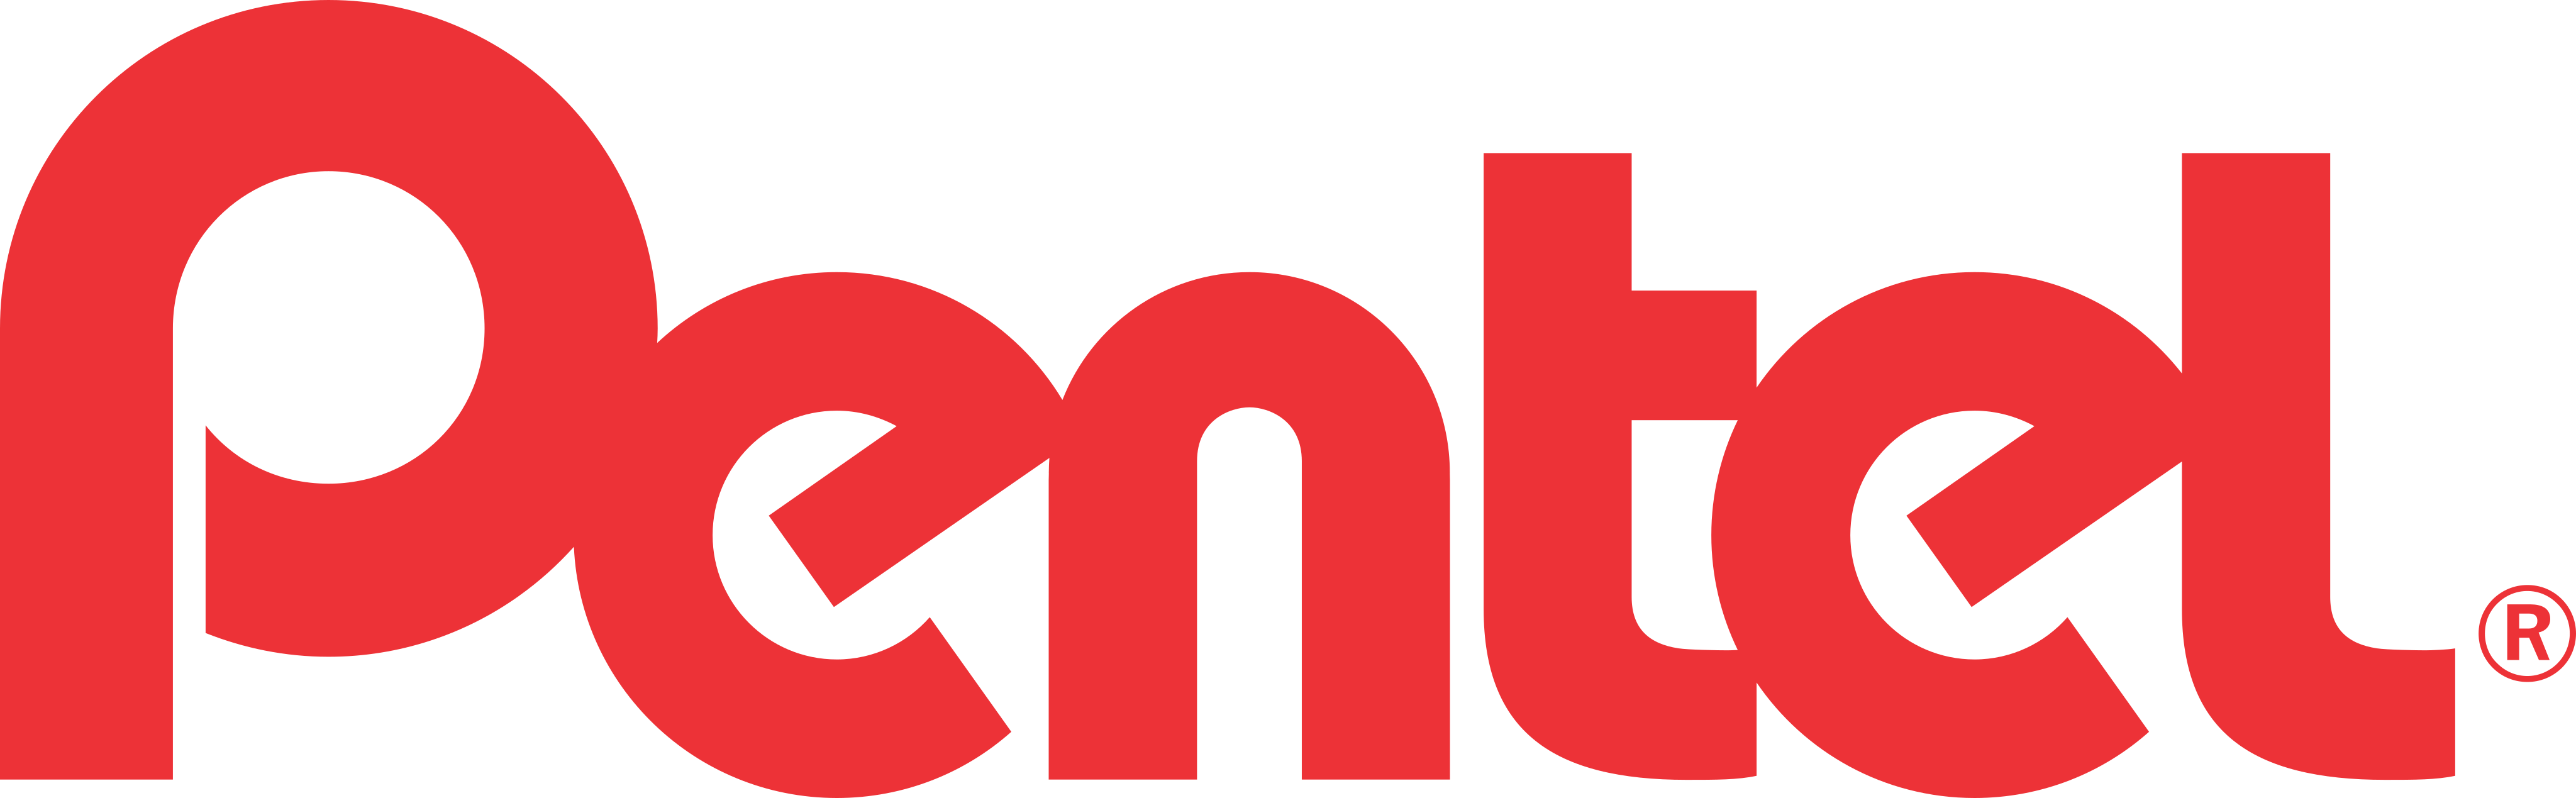 pentel logo - Pentel Logo